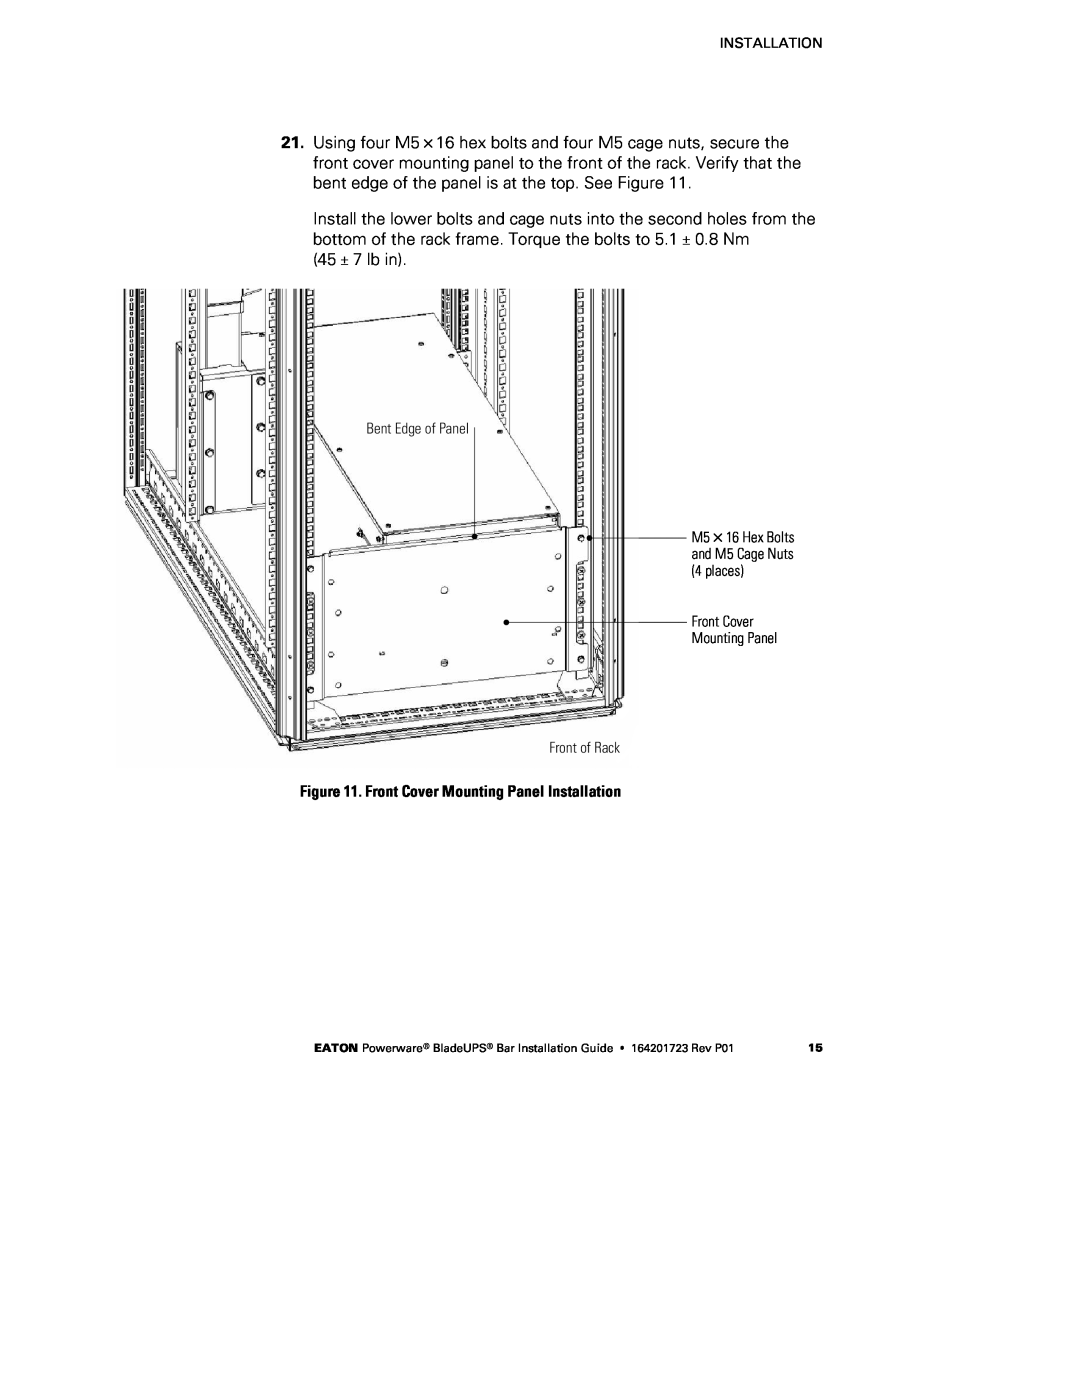 Eaton Electrical BladeUPS Bar manual 45 ± 7 lb in 